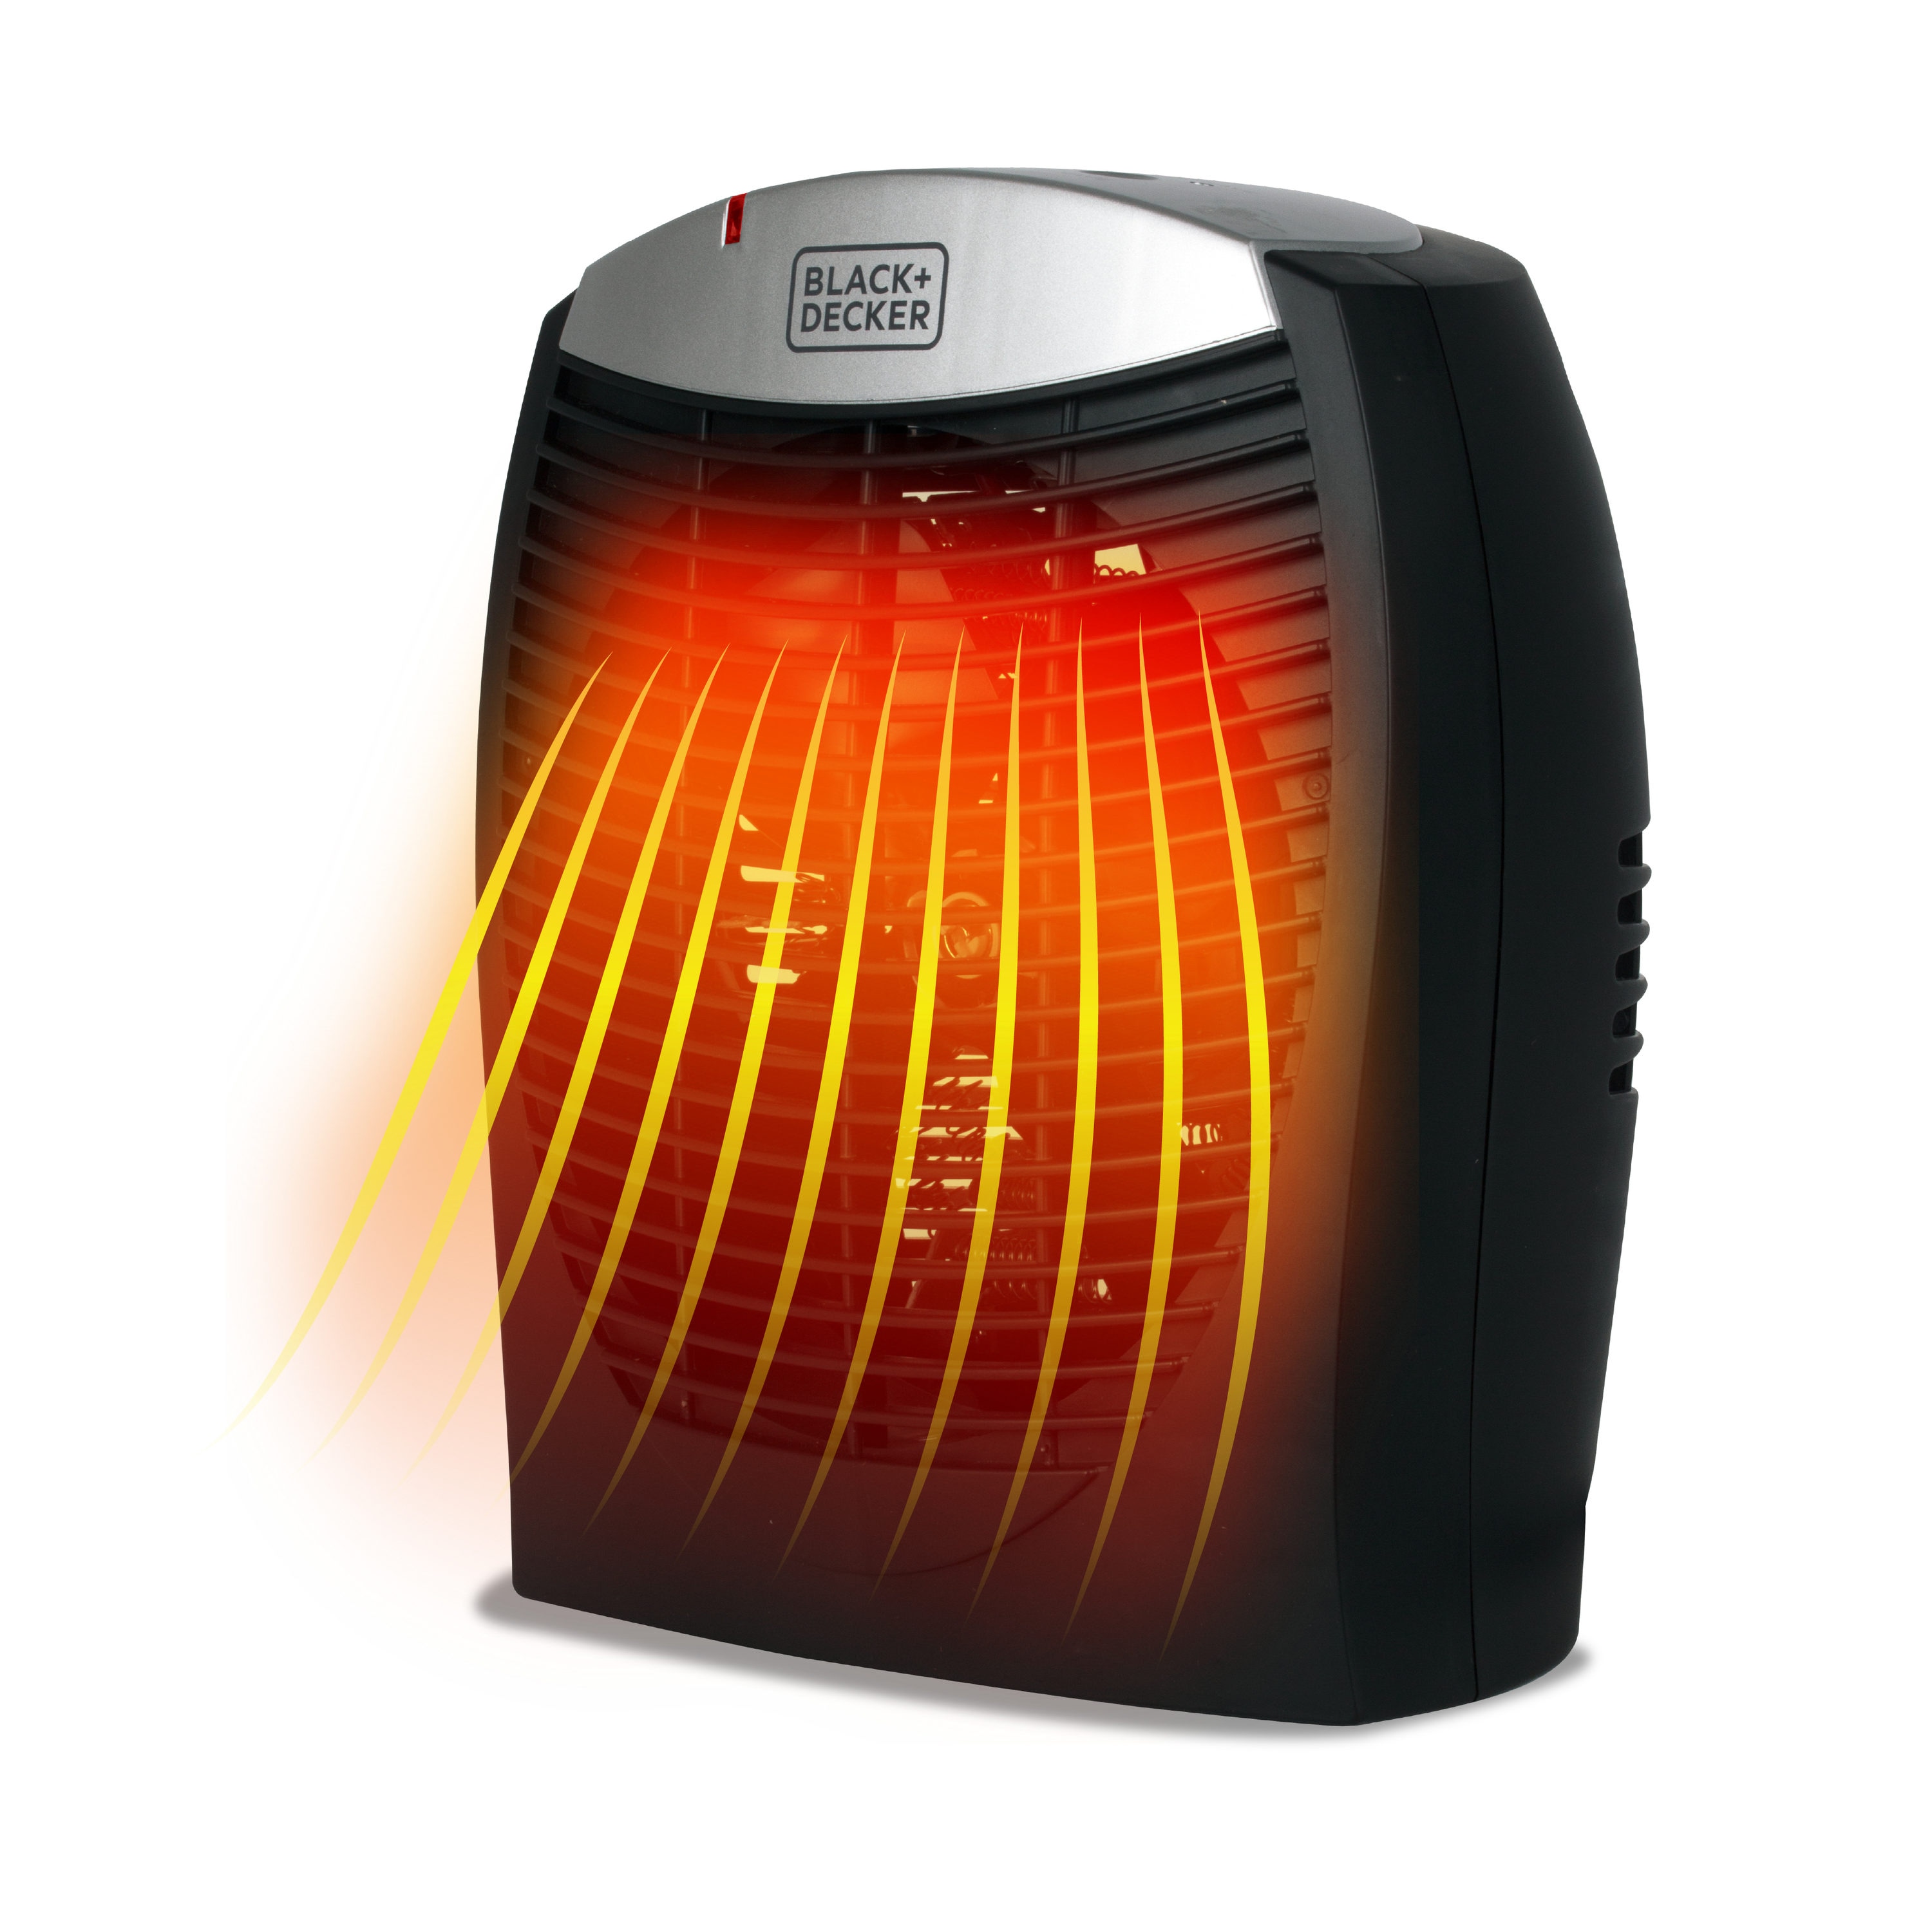 Black & Decker BDUH200 Electric Utility/Portable Heater Reviews –